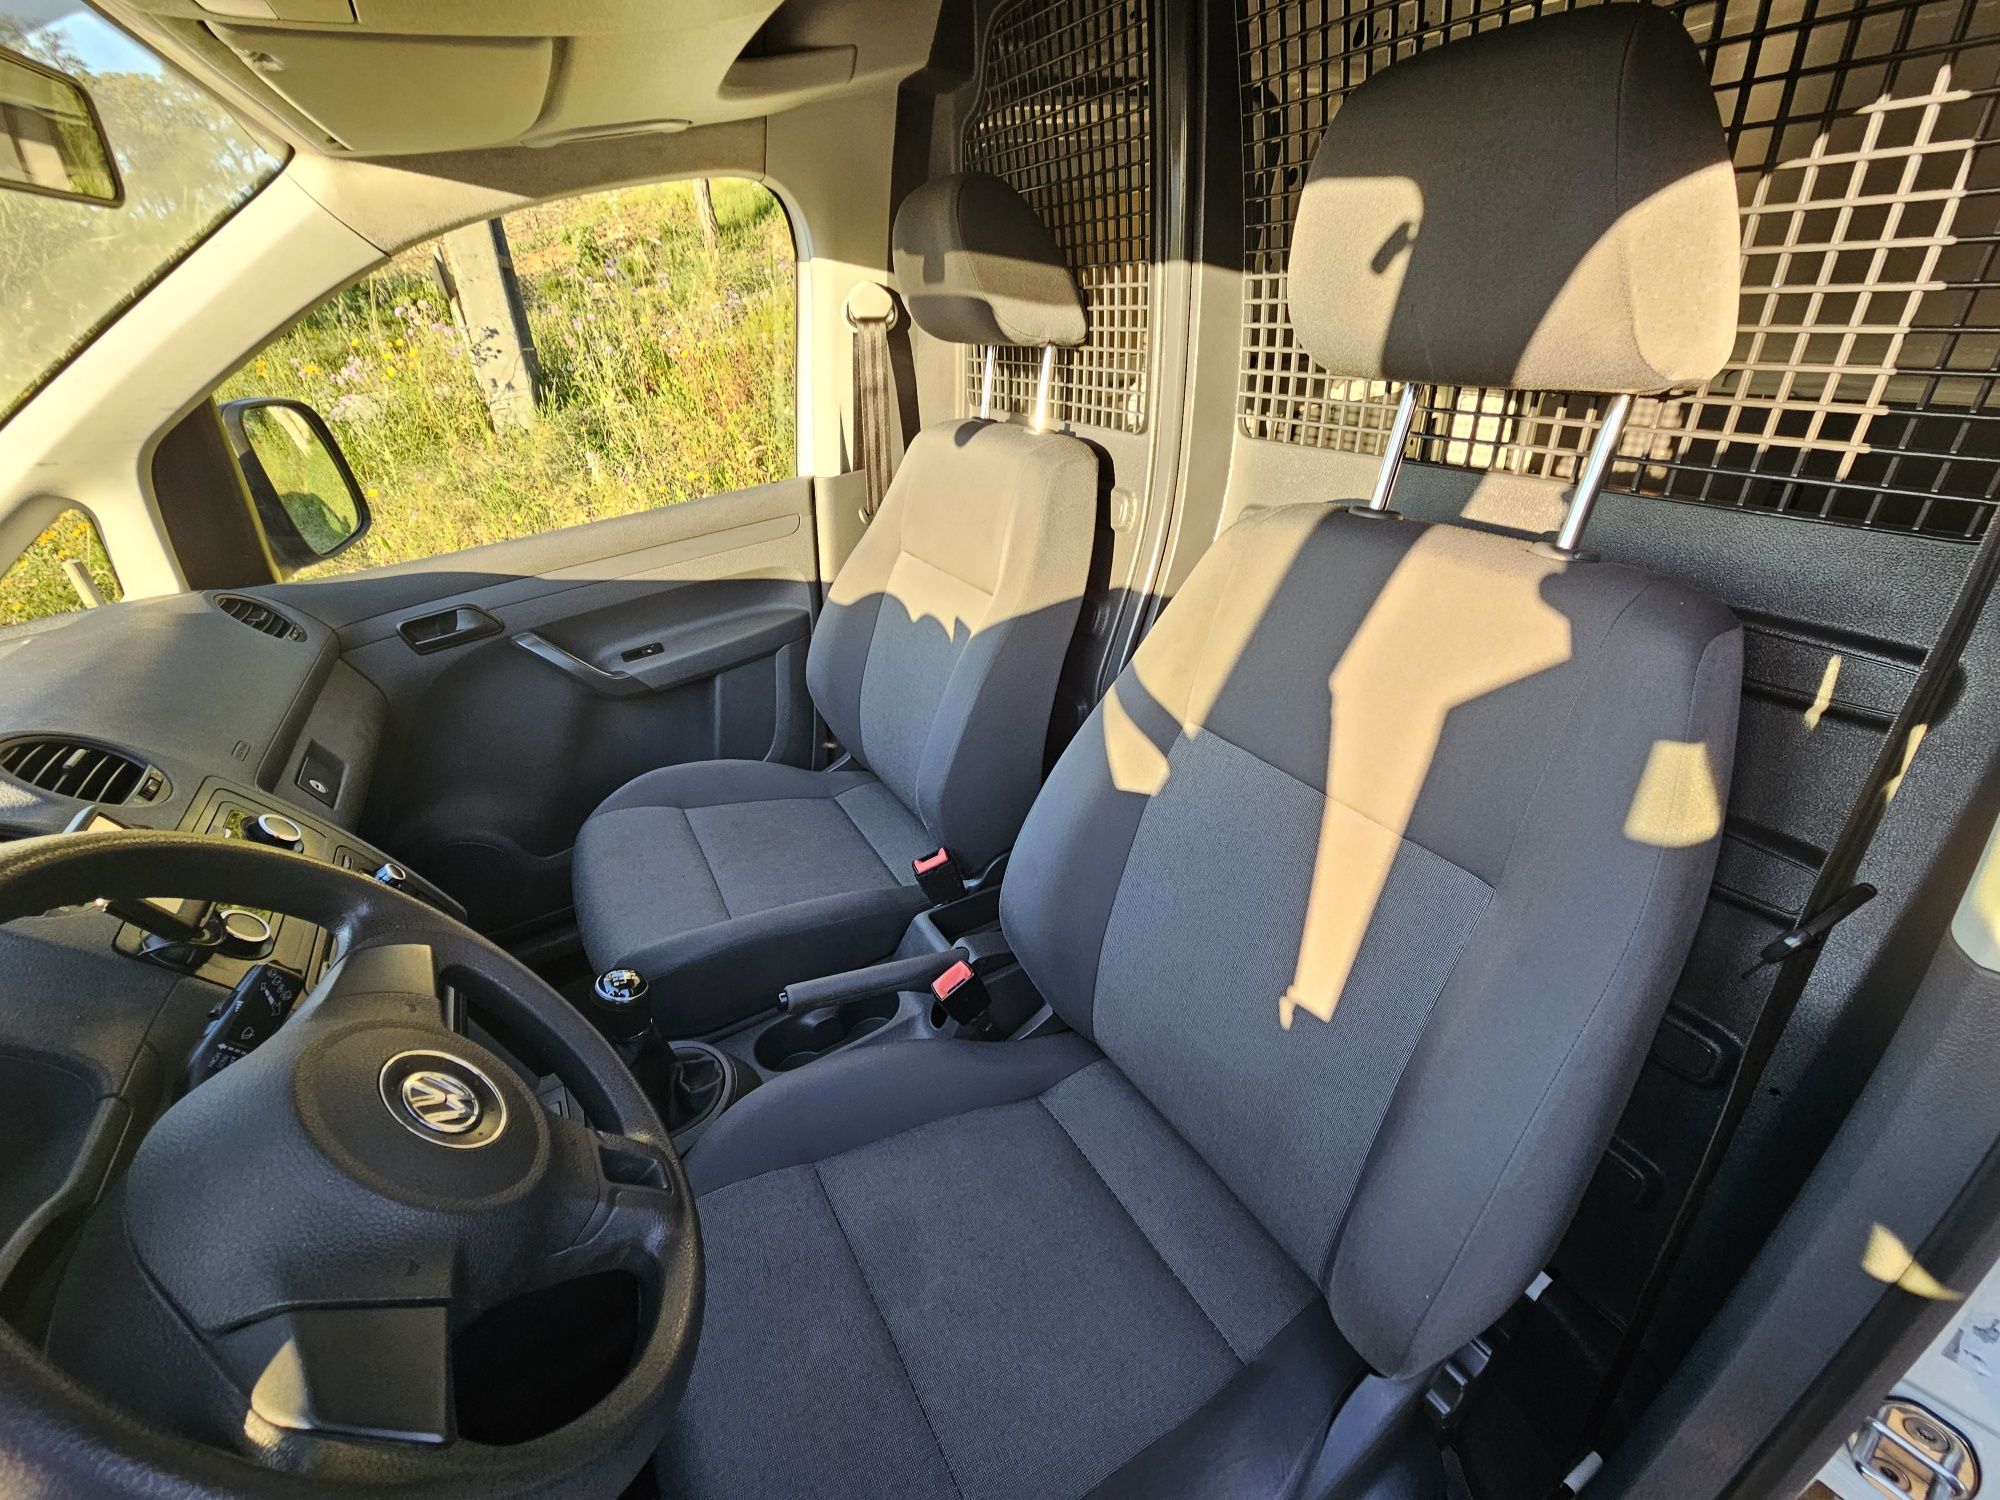 VW Volkswagen Caddy 4Motion 4x4